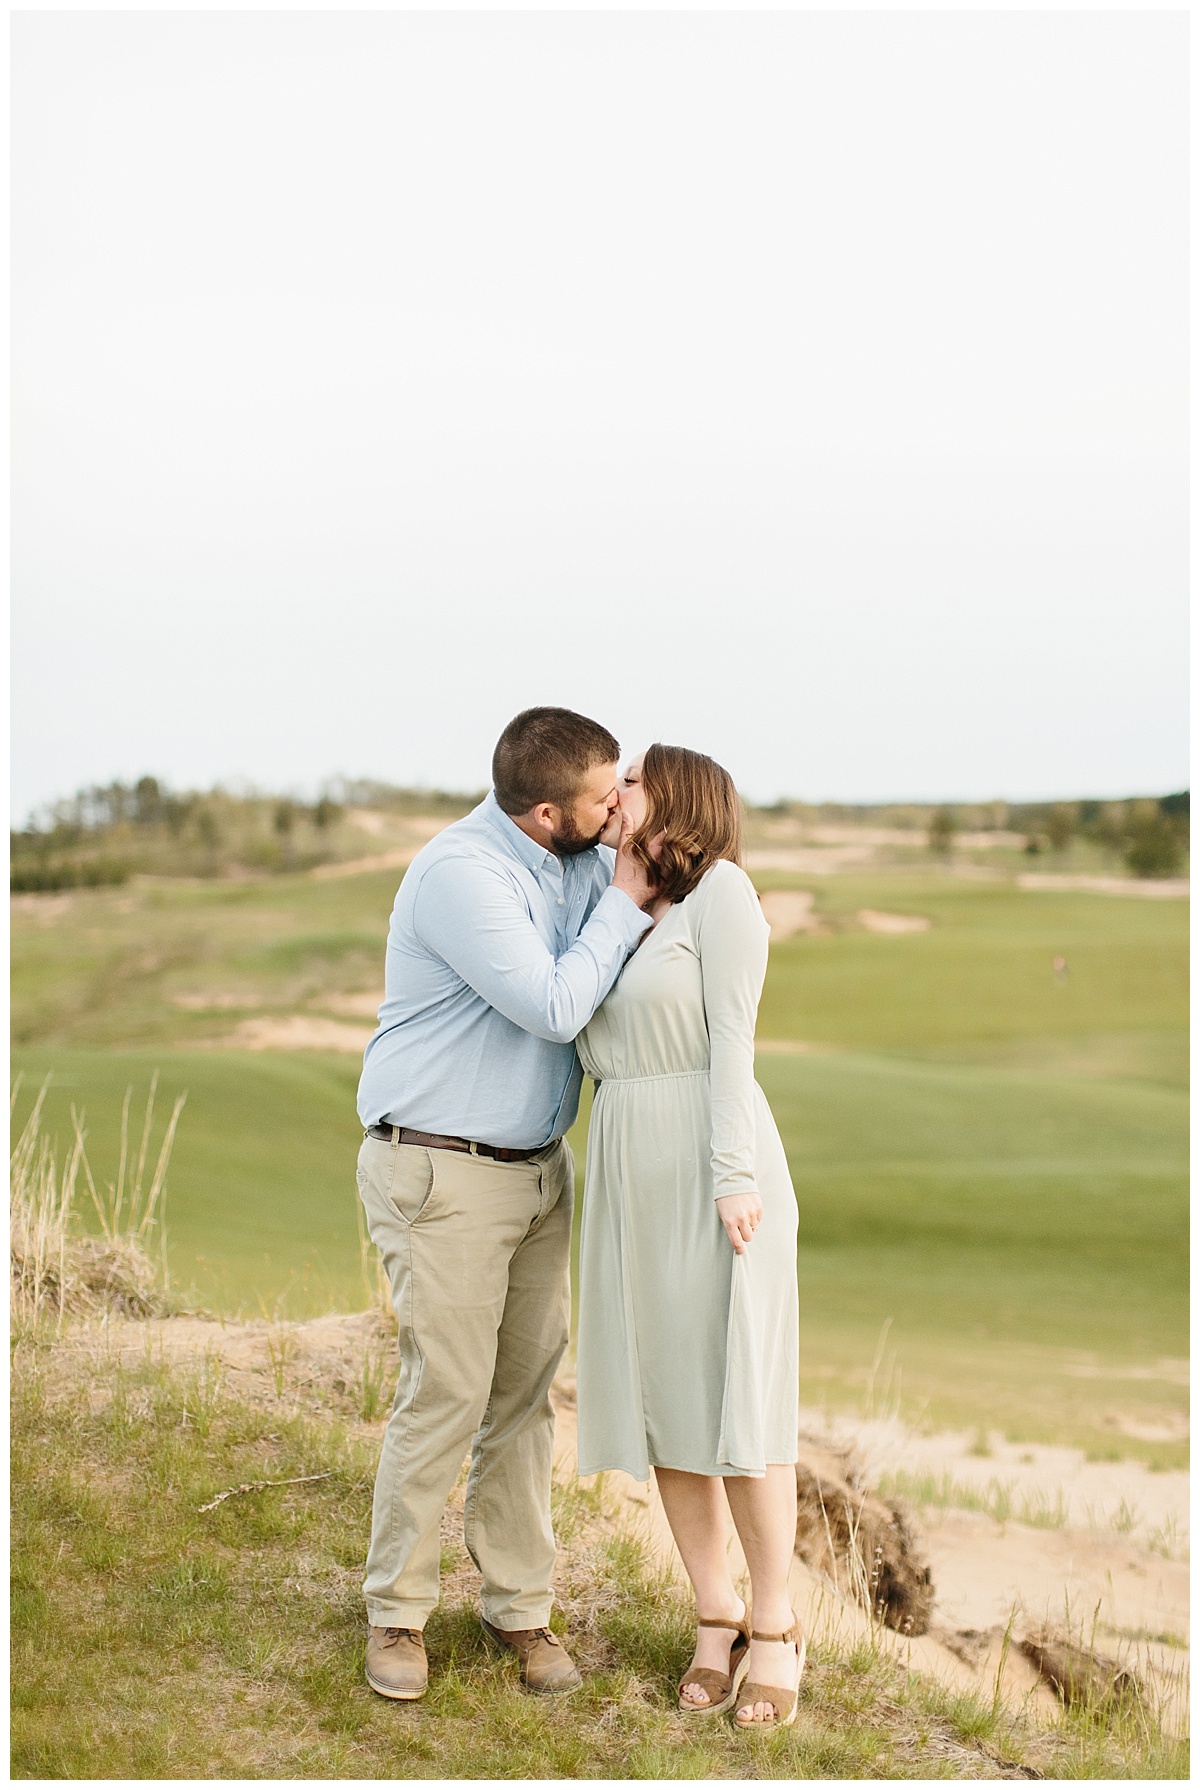 Engagement, Central Wisconsin, Wisconsin, Golf Course, Spring, Beach, Natural light, Wedding Photographer, Stevens Point, Sand Valley, Nekoosa